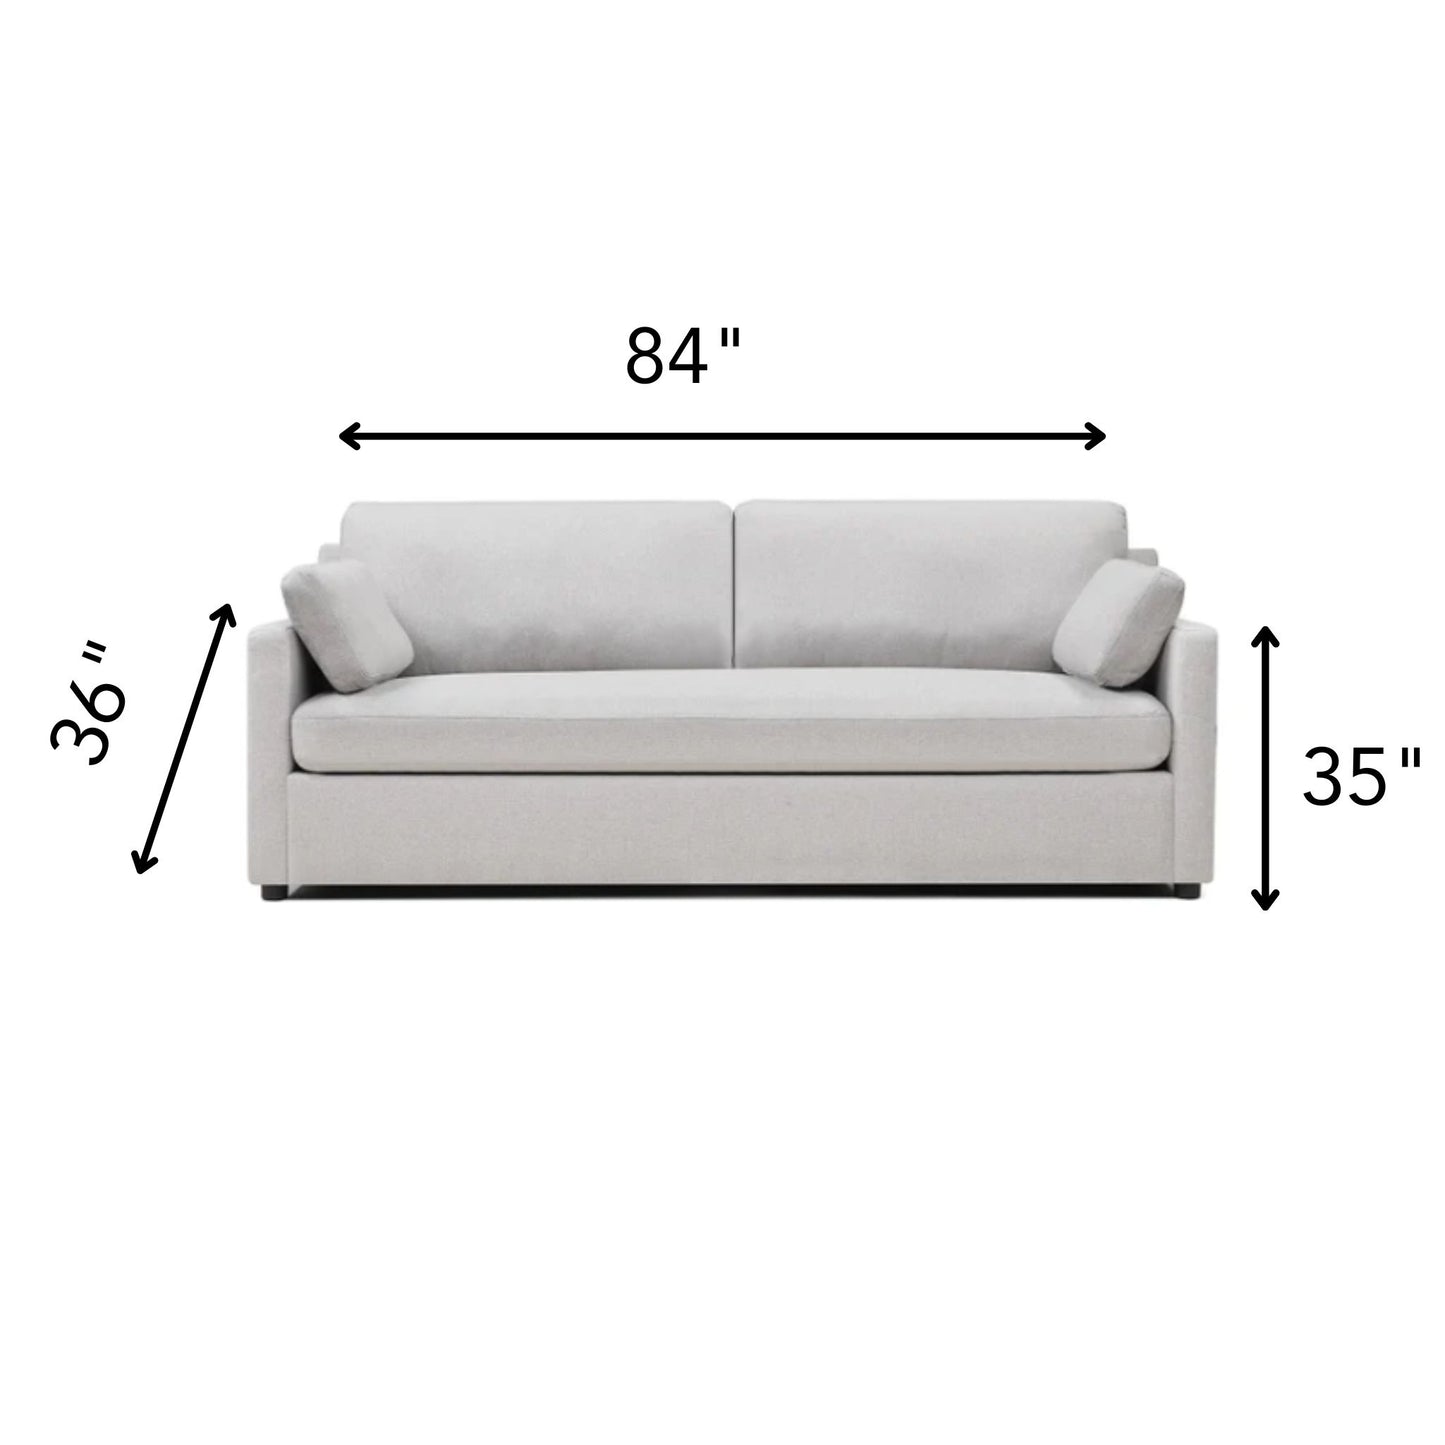 LUXE Upholstered Sofa Light Grey